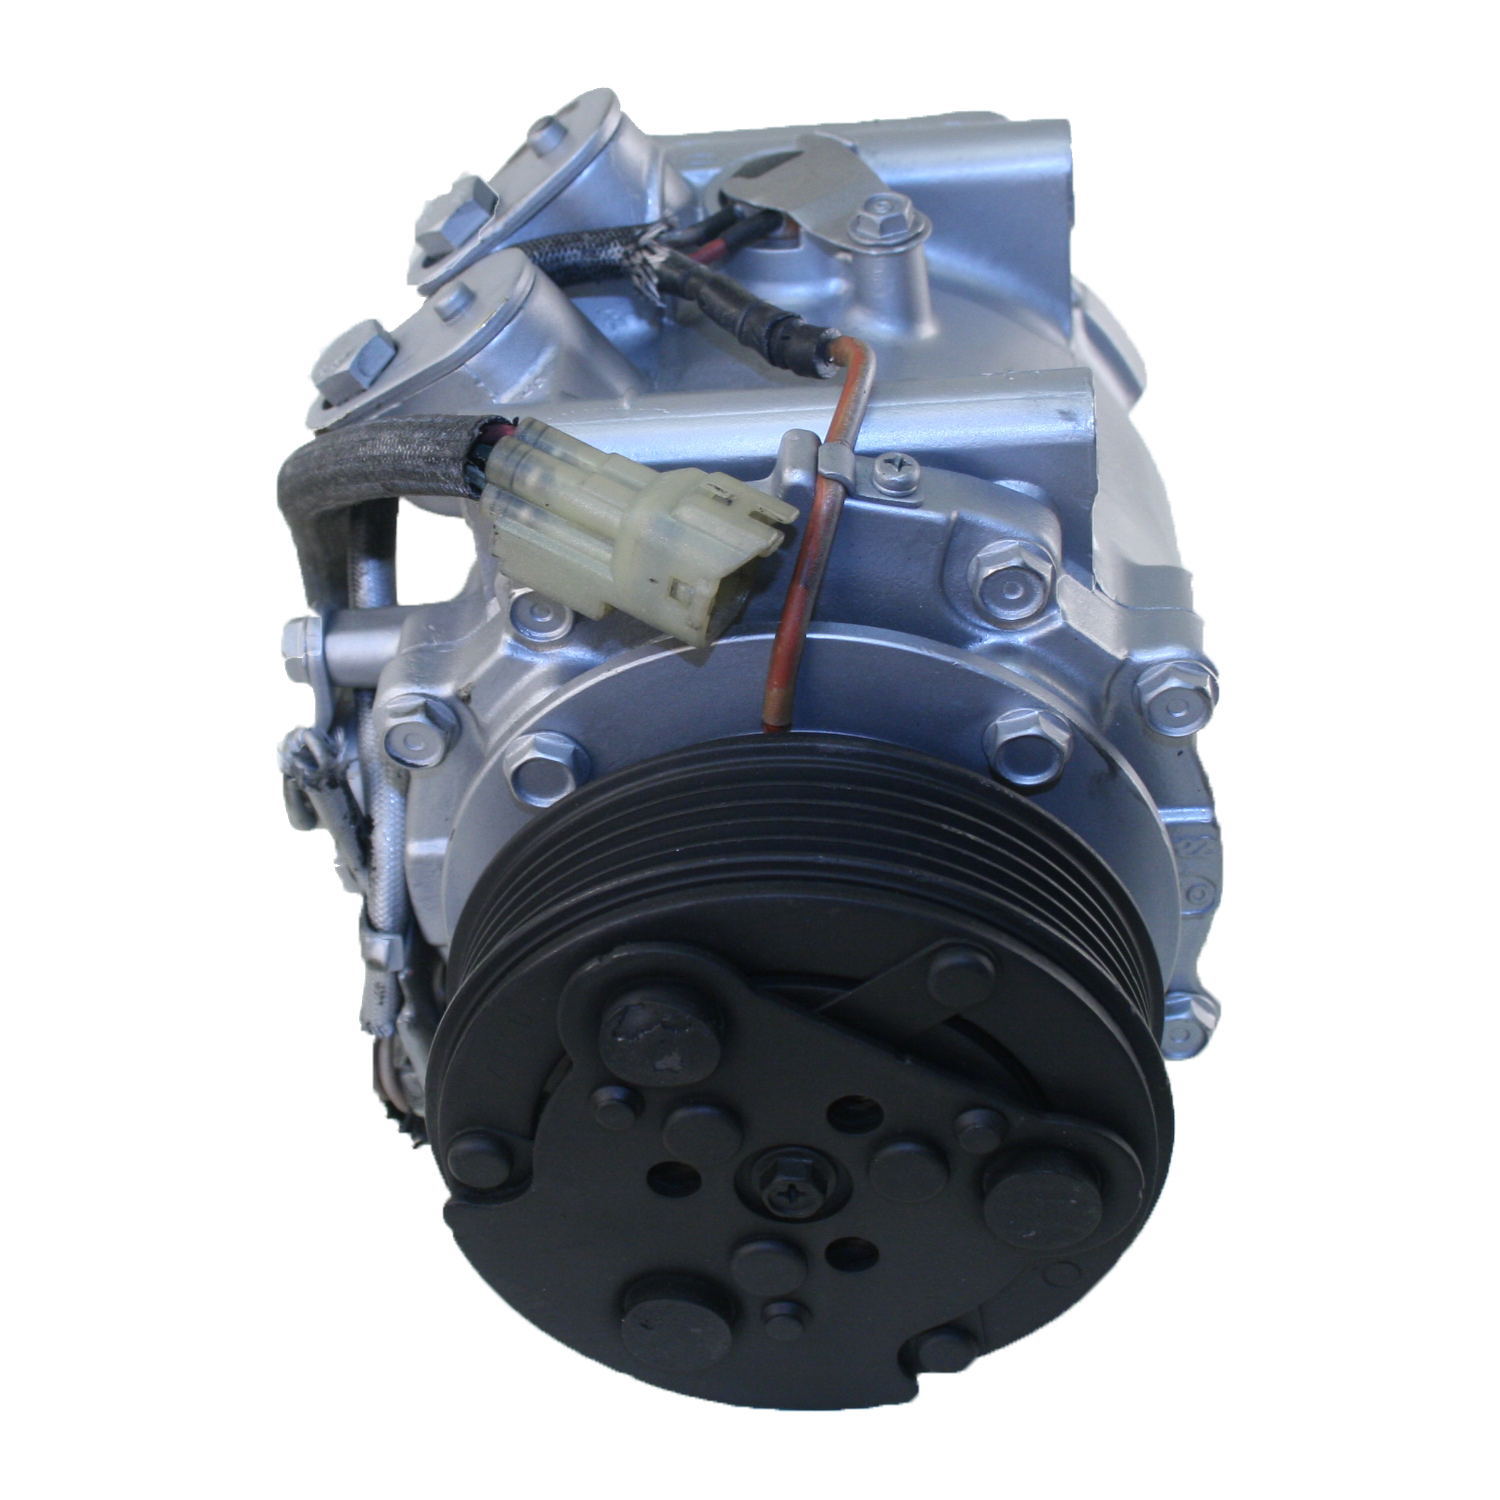 TCW Compressor 40802.501 Remanufactured Product Image field_60b6a13a6e67c